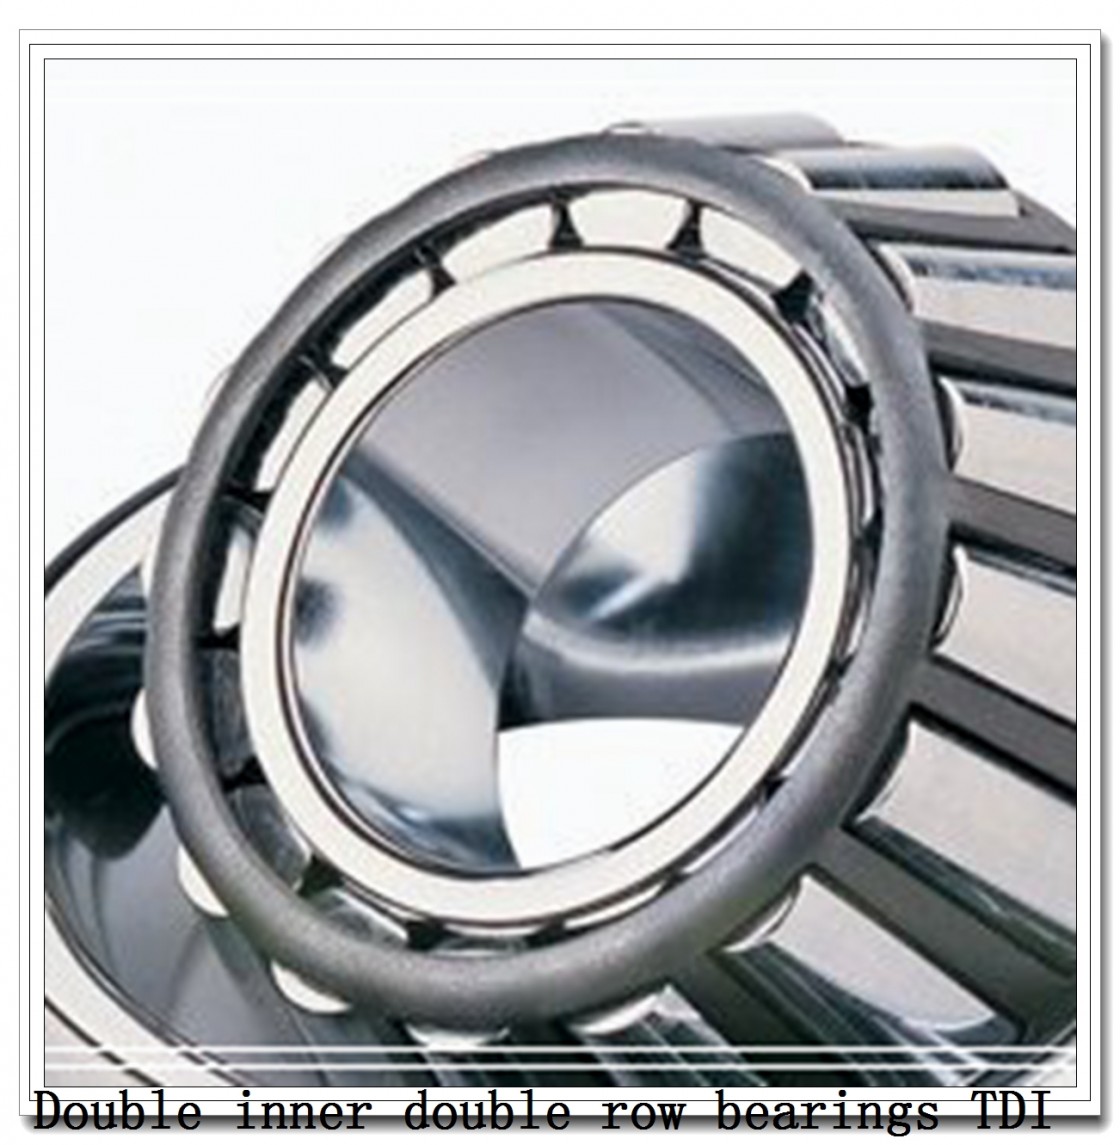 460TDO680-3 Double inner double row bearings TDI